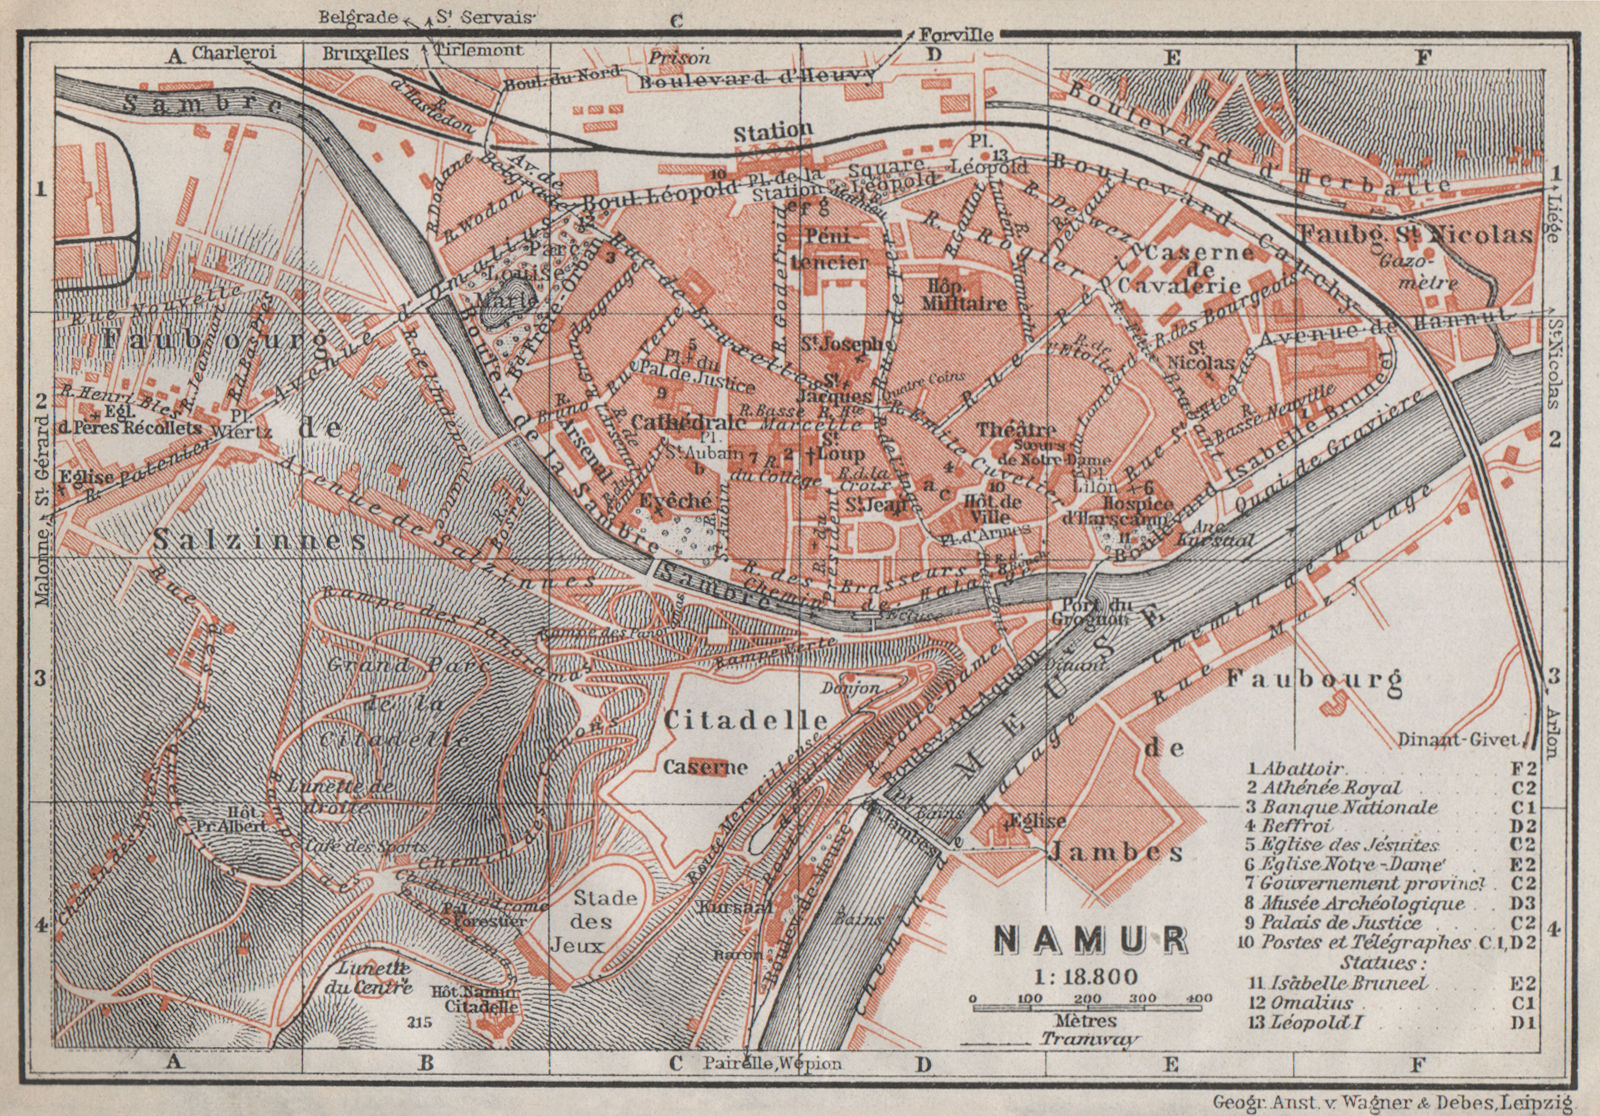 Associate Product NAMUR NAMEN NAMEUR antique town city plan. Belgium carte. BAEDEKER 1910 map